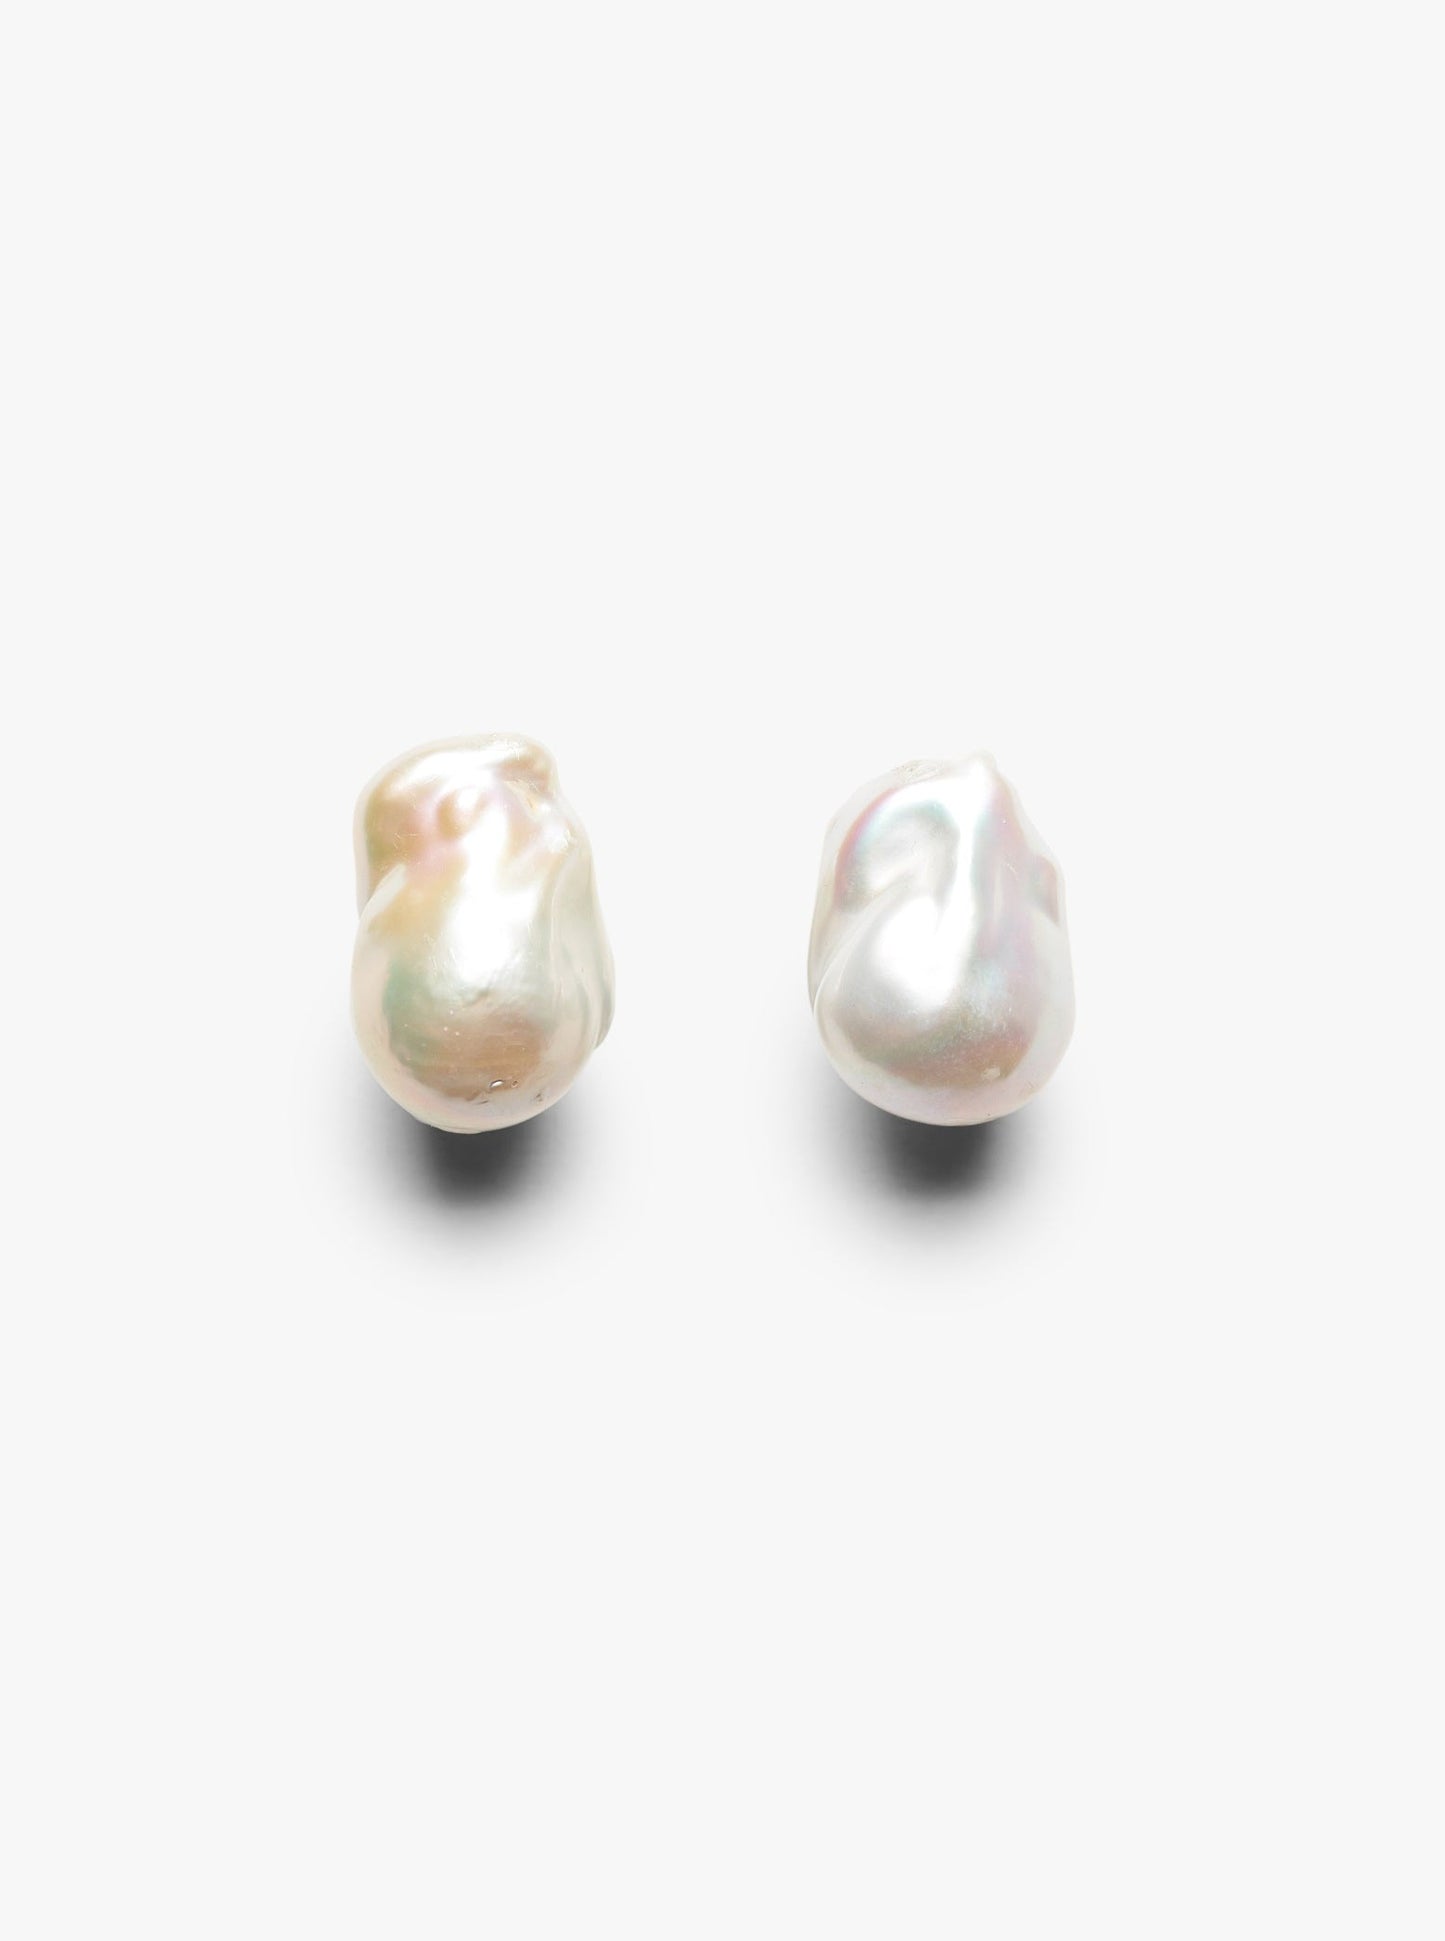 Earclips: baroque pearls